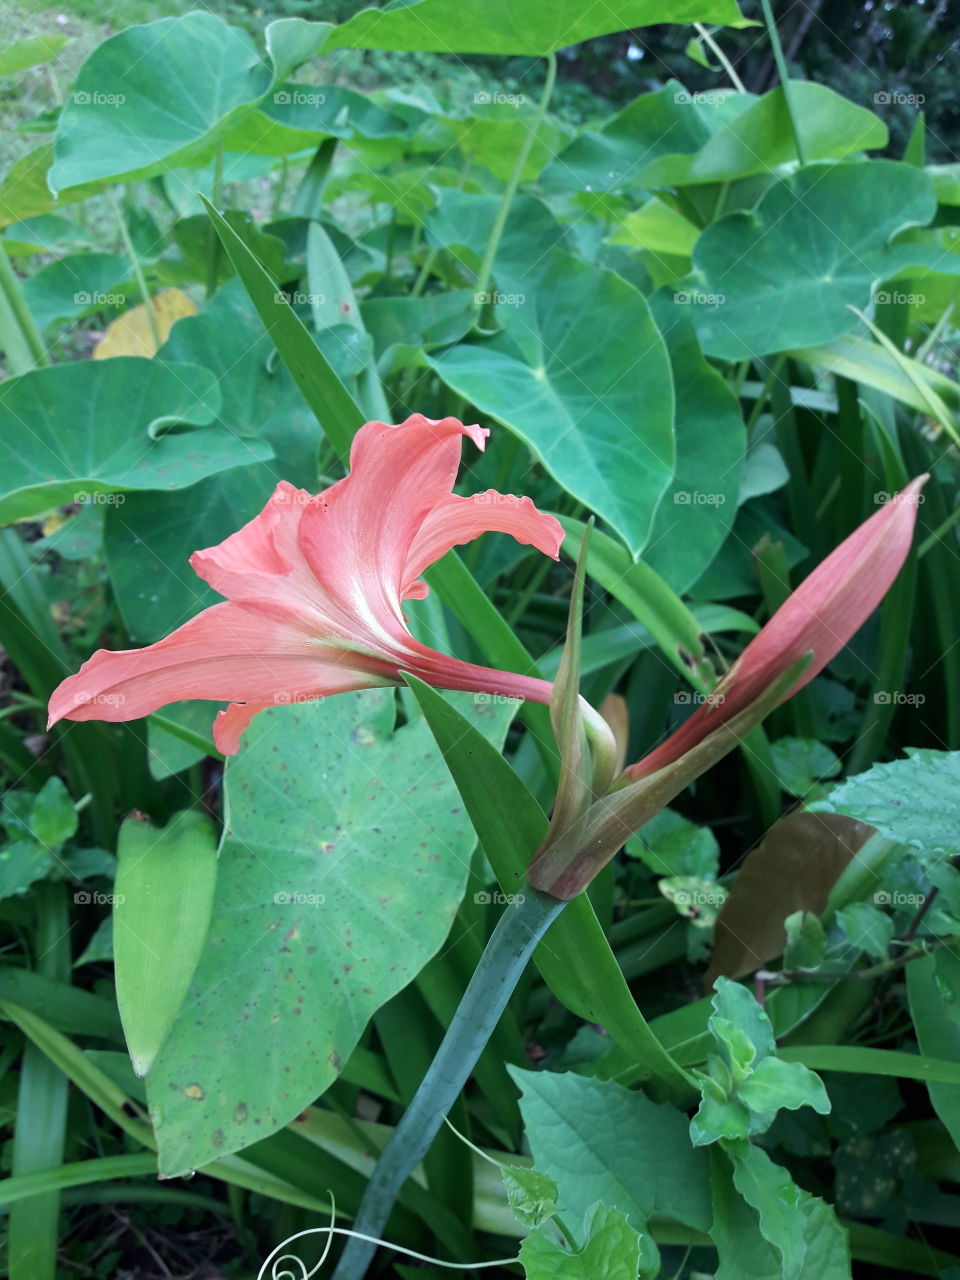 Amaryllis Lily flower